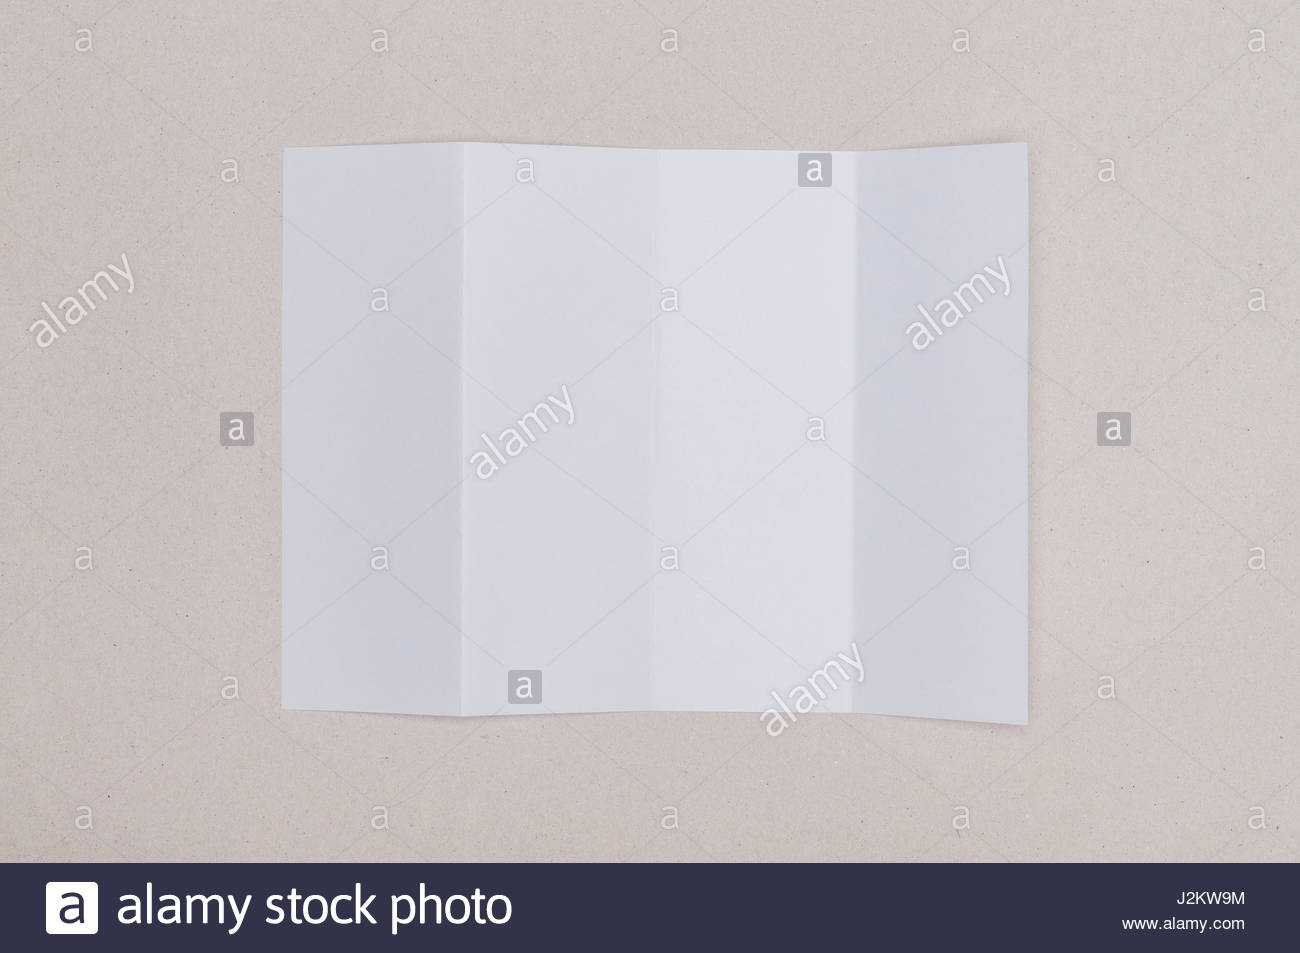 Tri Fold Card Stock Photos & Tri Fold Card Stock Images – Alamy With Tri Fold Tent Card Template